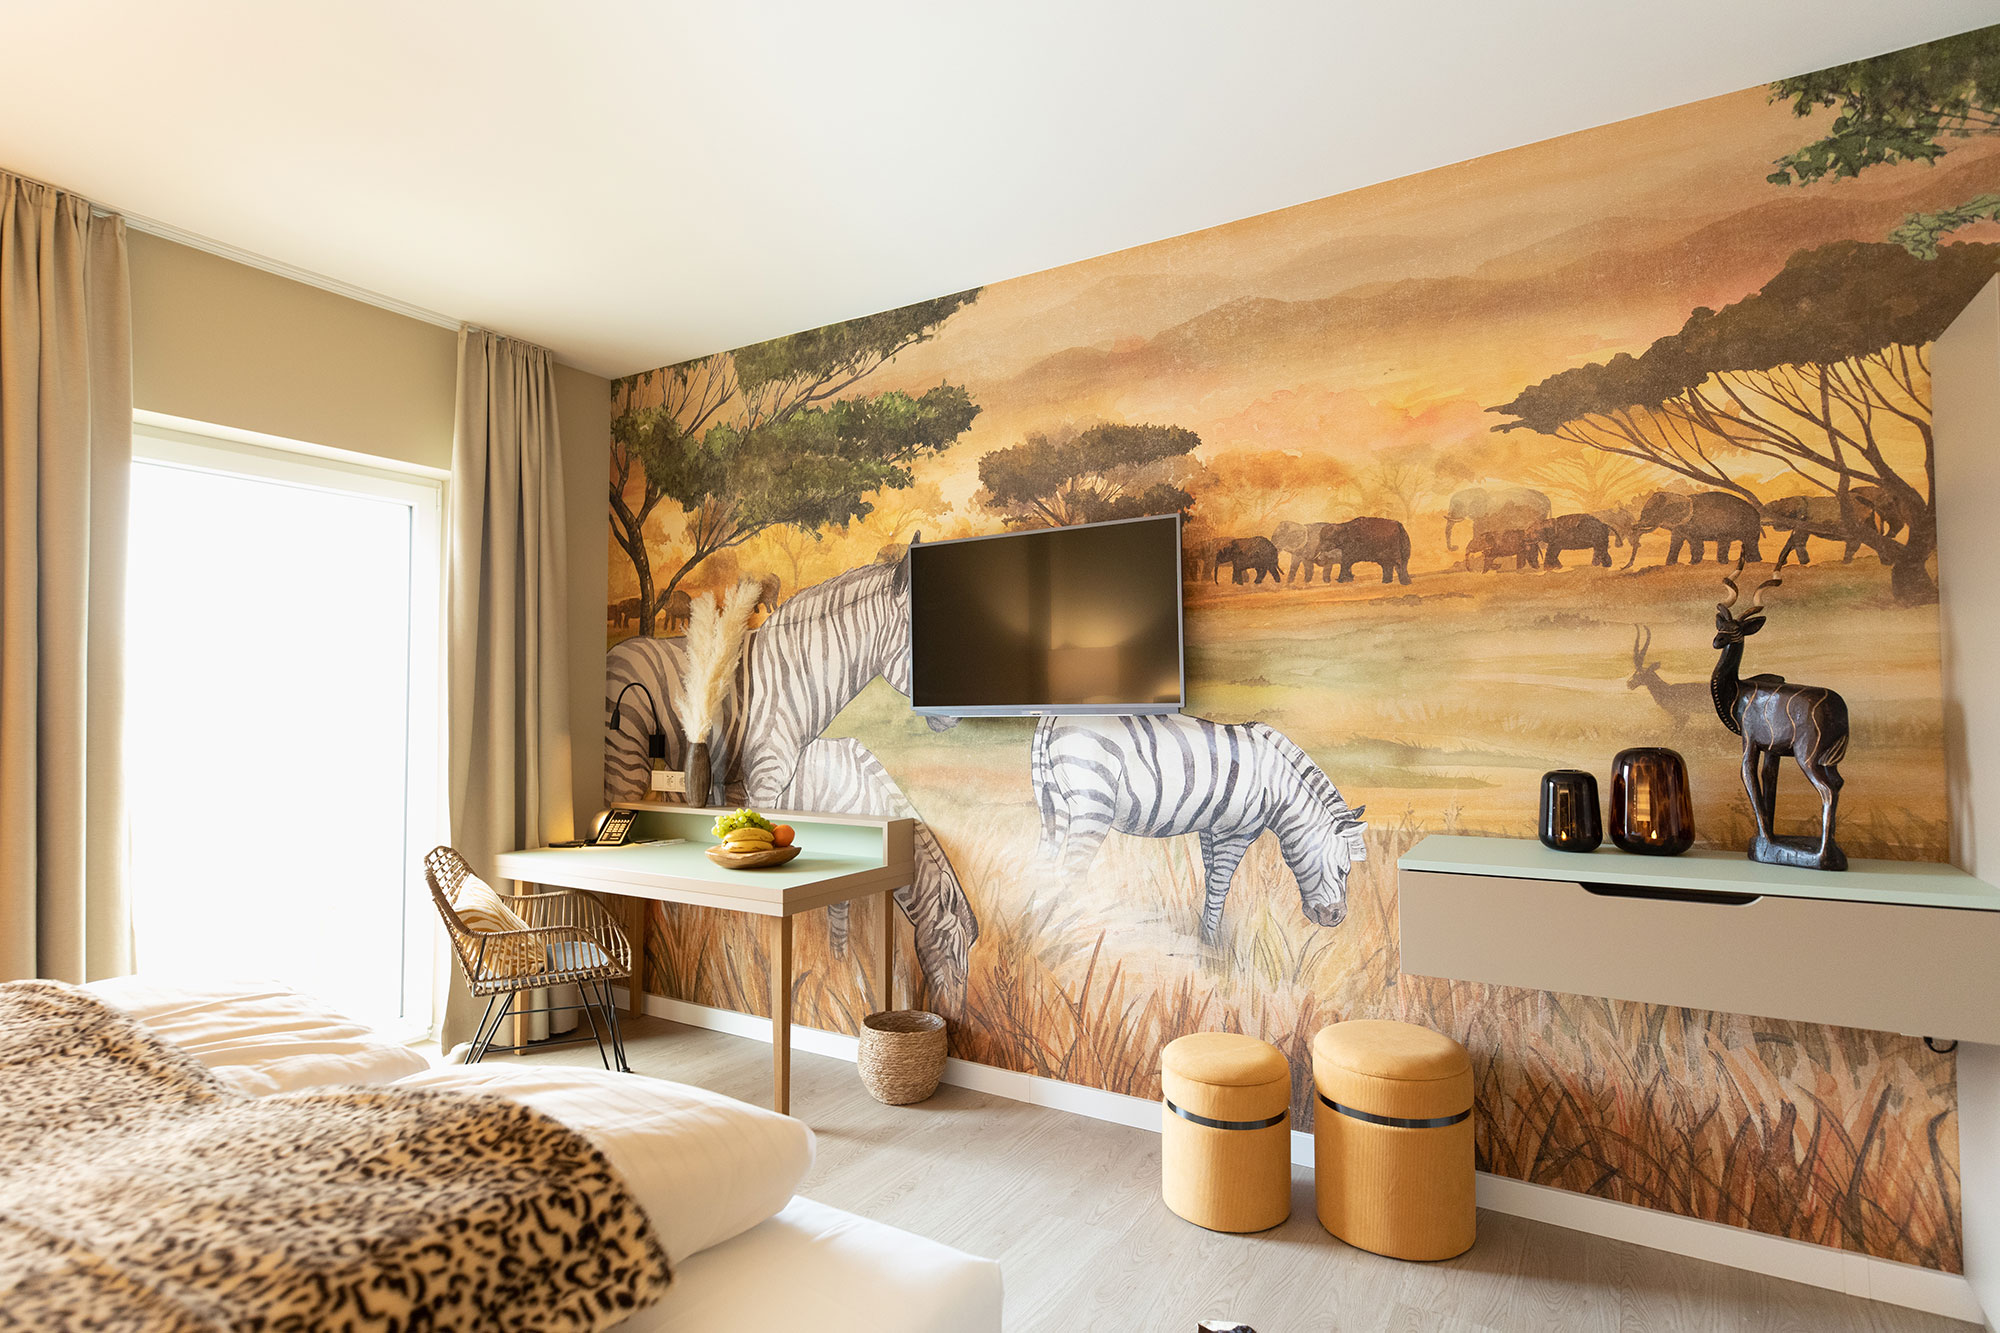 Hotel am Zoo by Designwerk 13